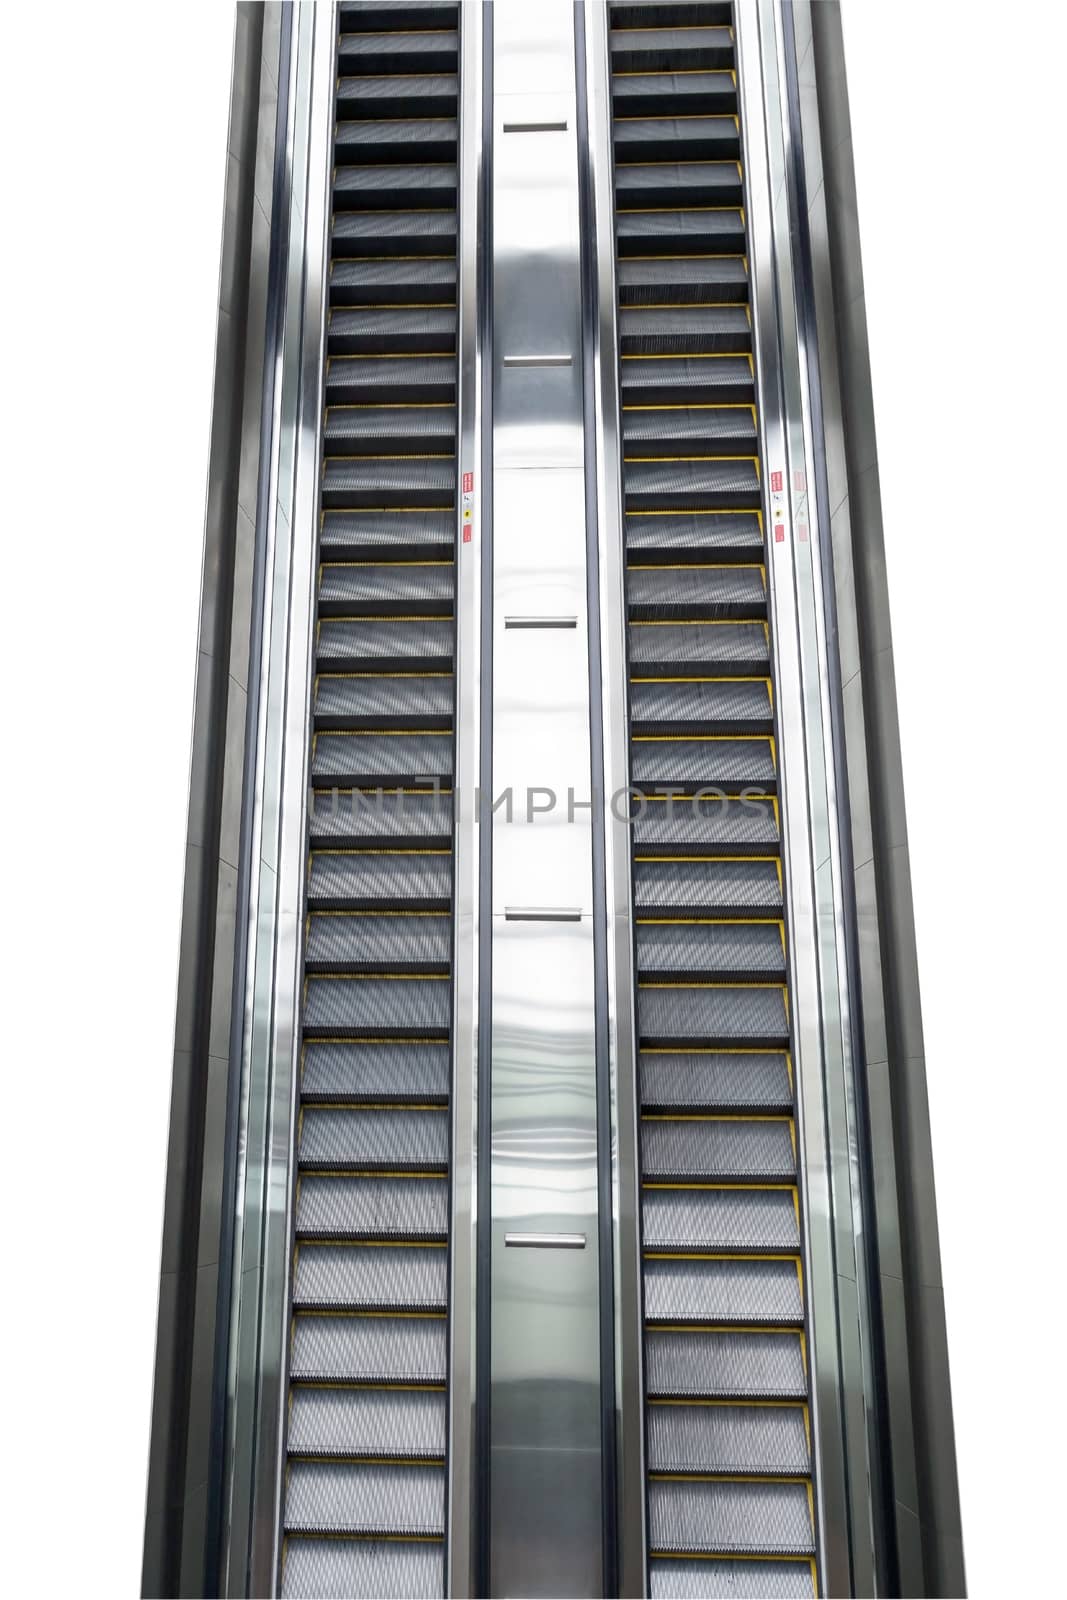 Escalator in the big building. by wattanaphob